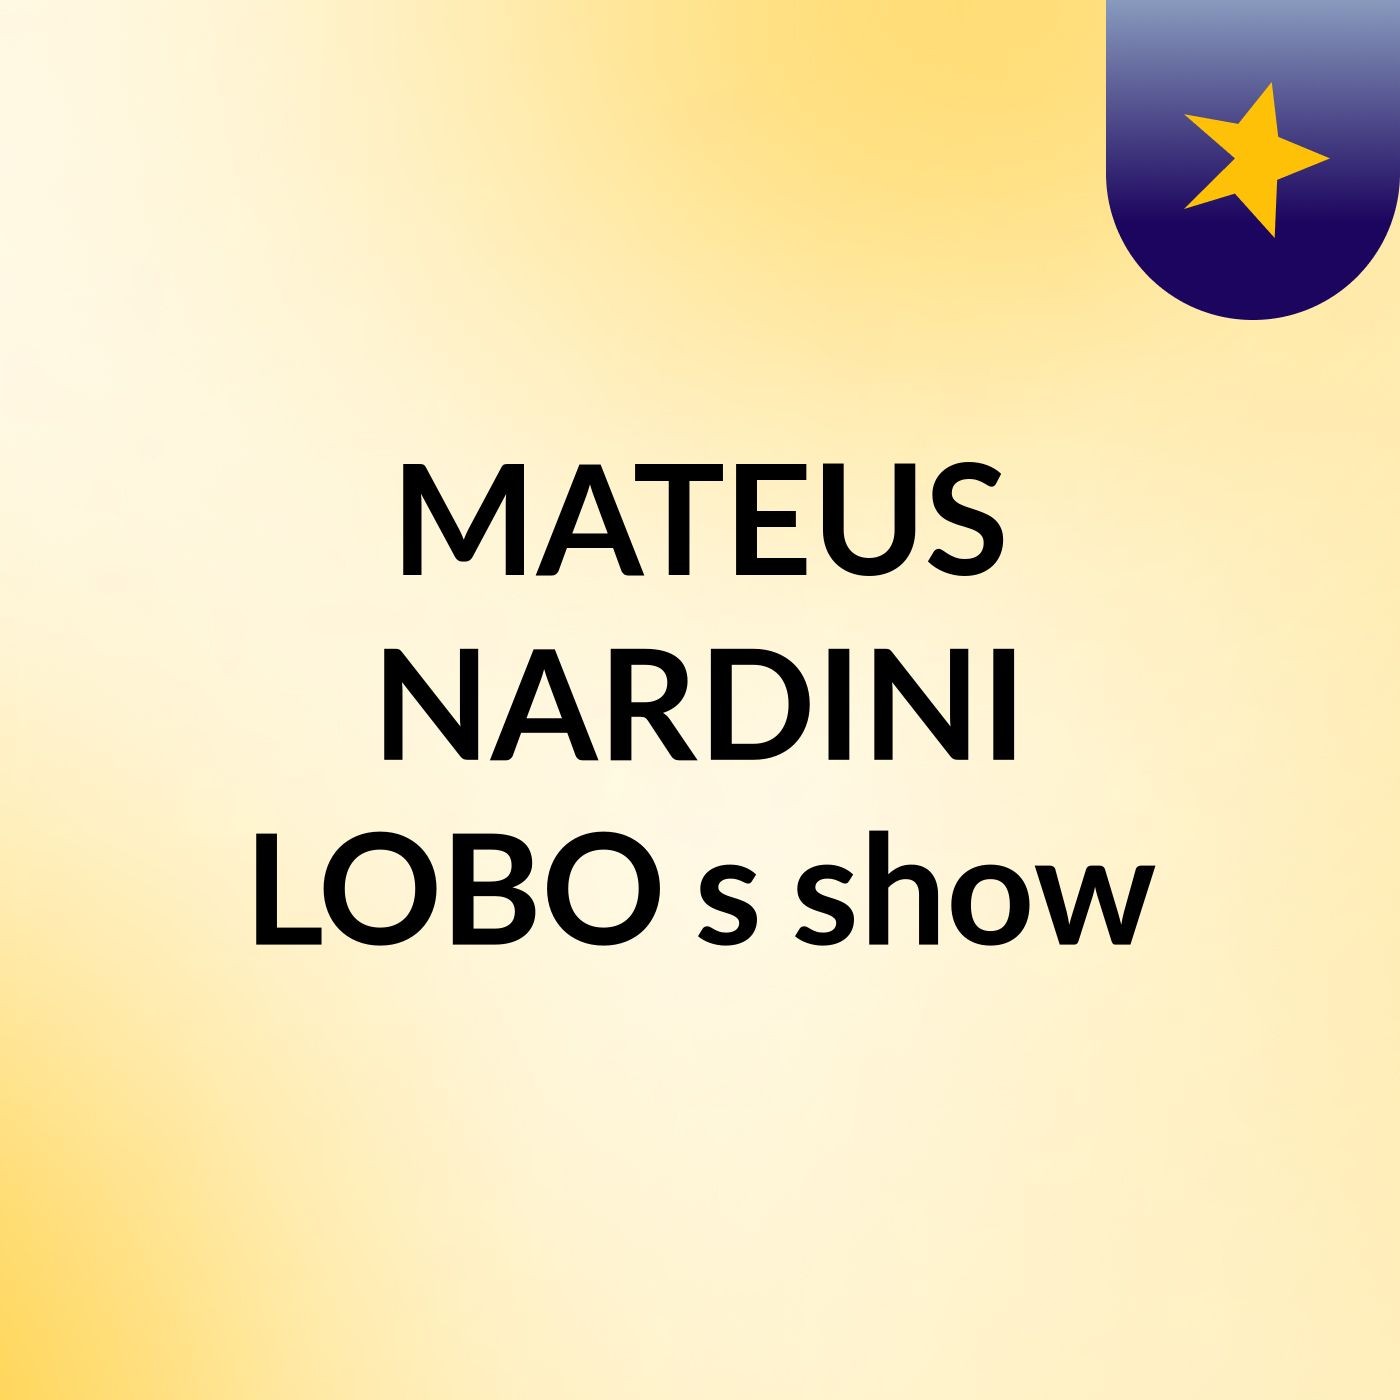 Episódio 2 - MATEUS NARDINI LOBO's show